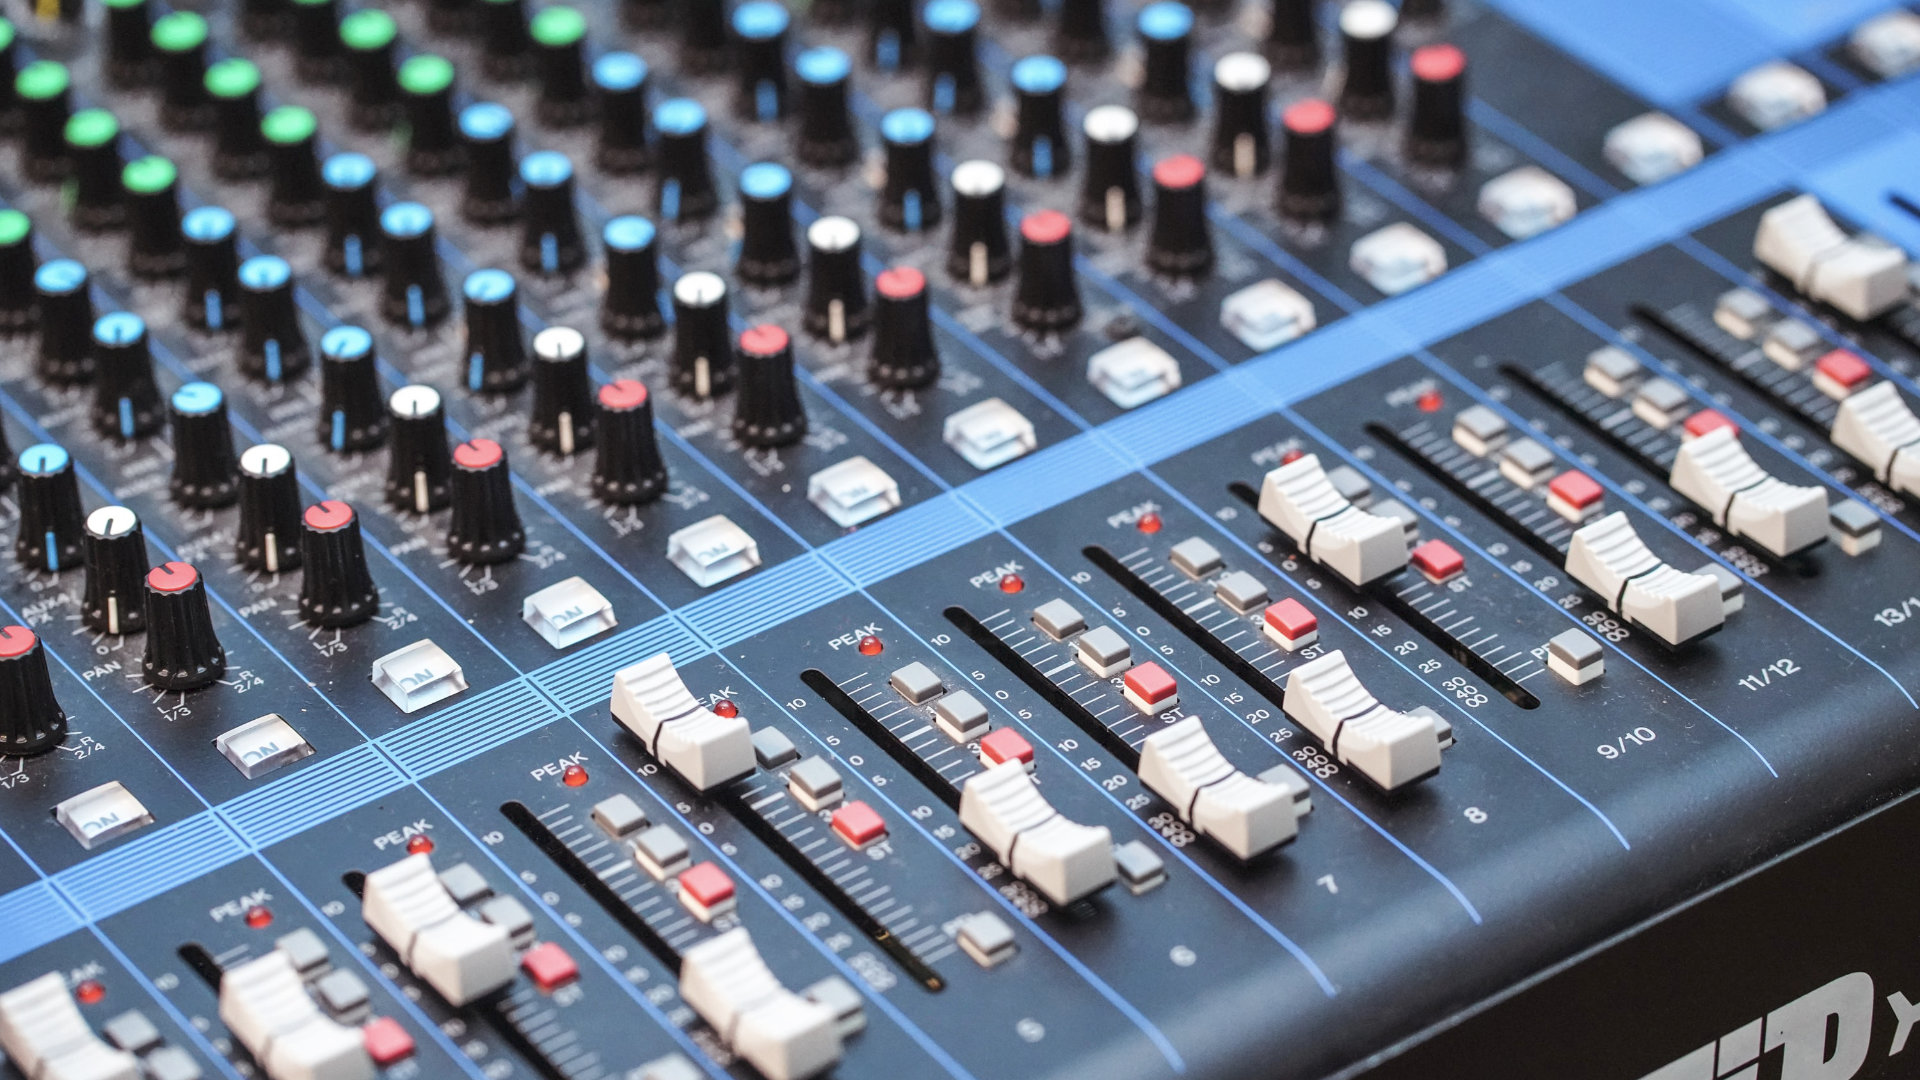 4 best mixing consoles for live performance and studio recording - decibel peak